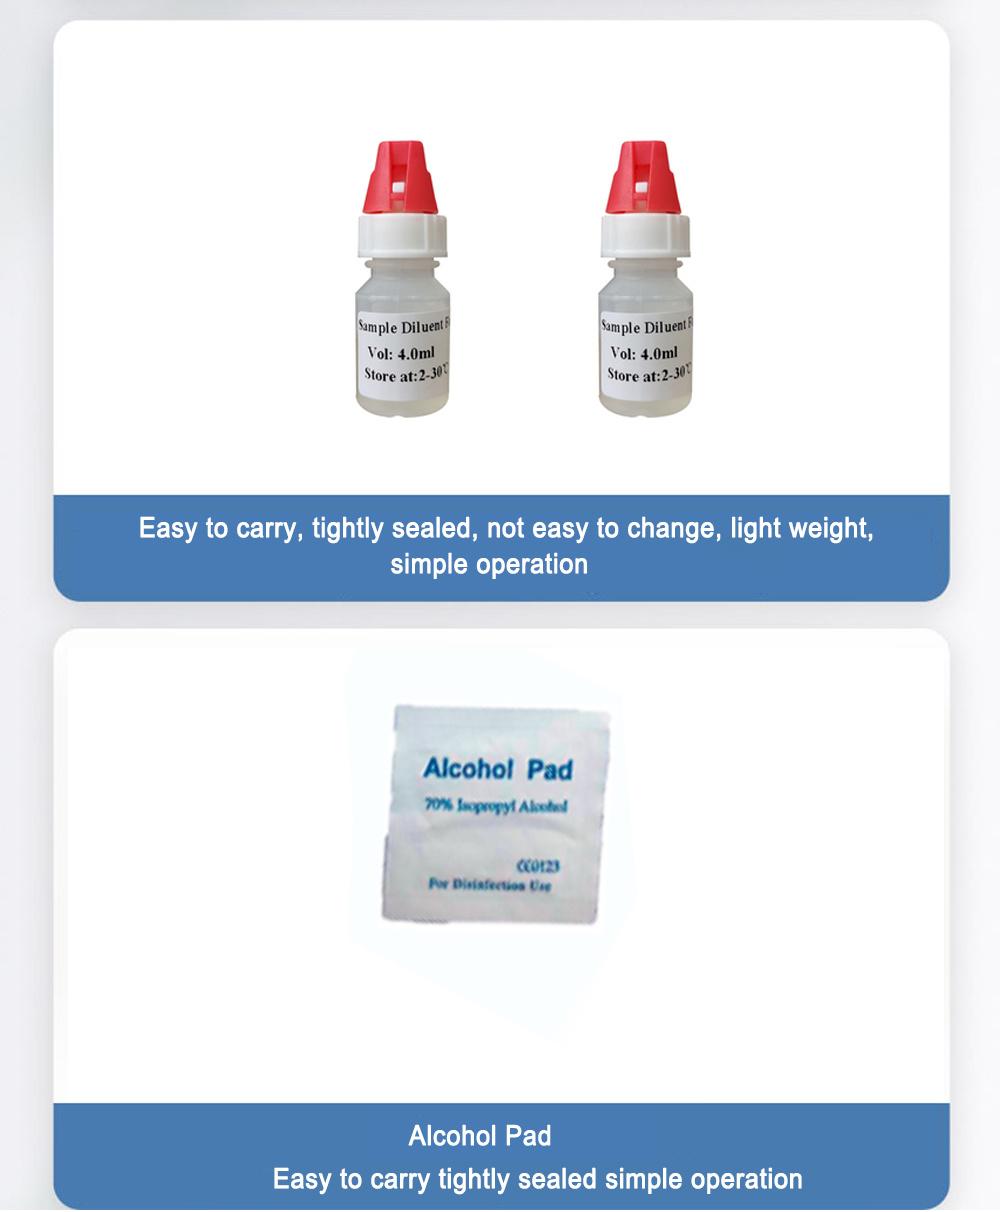 Rapid Malaria PV Test No Equipment Test Kit